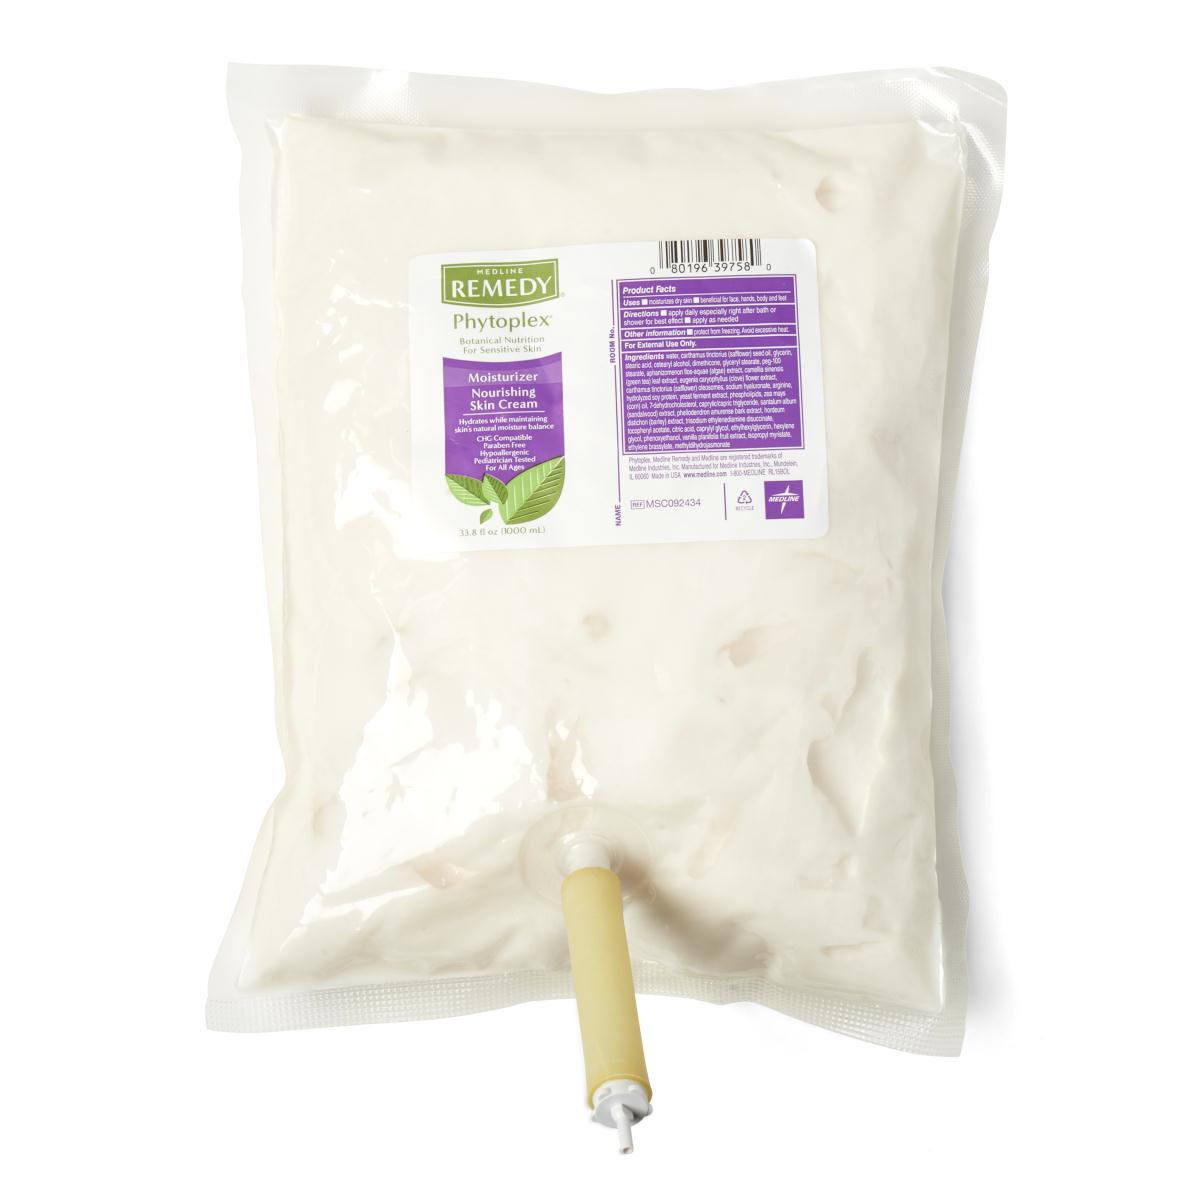 Medline Remedy Phytoplex Nourish Cream 1L Bag 8